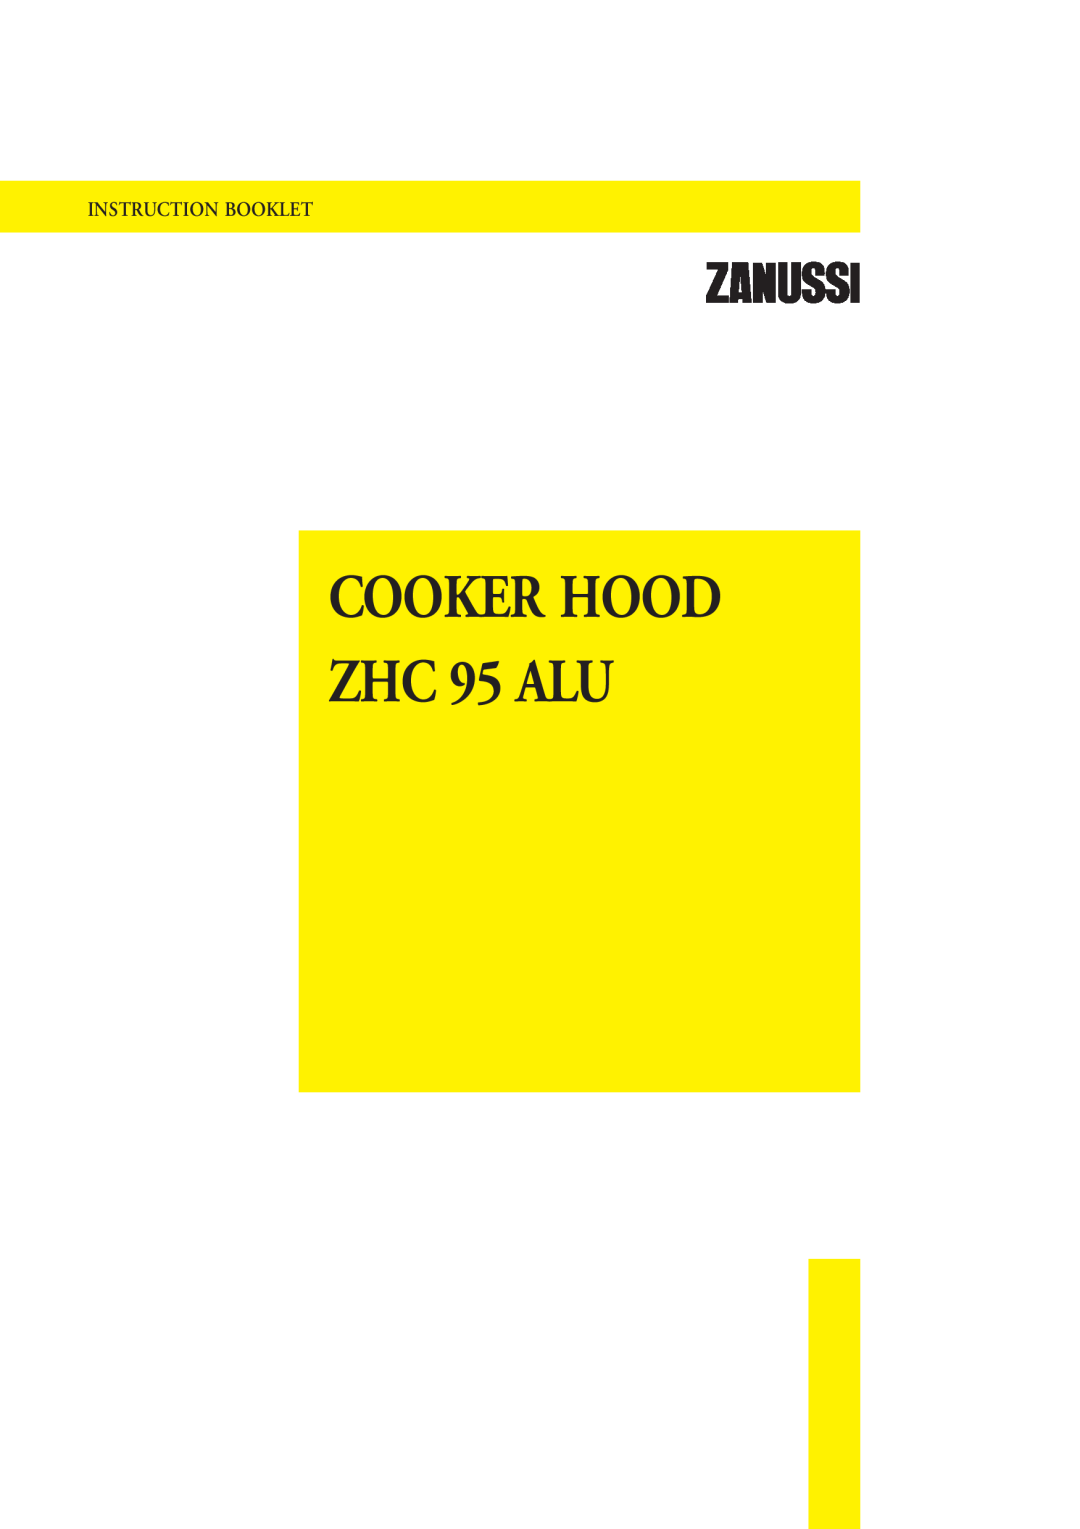 Zanussi manual COOKER HOOD ZHC 95 ALU, Instruction Booklet 